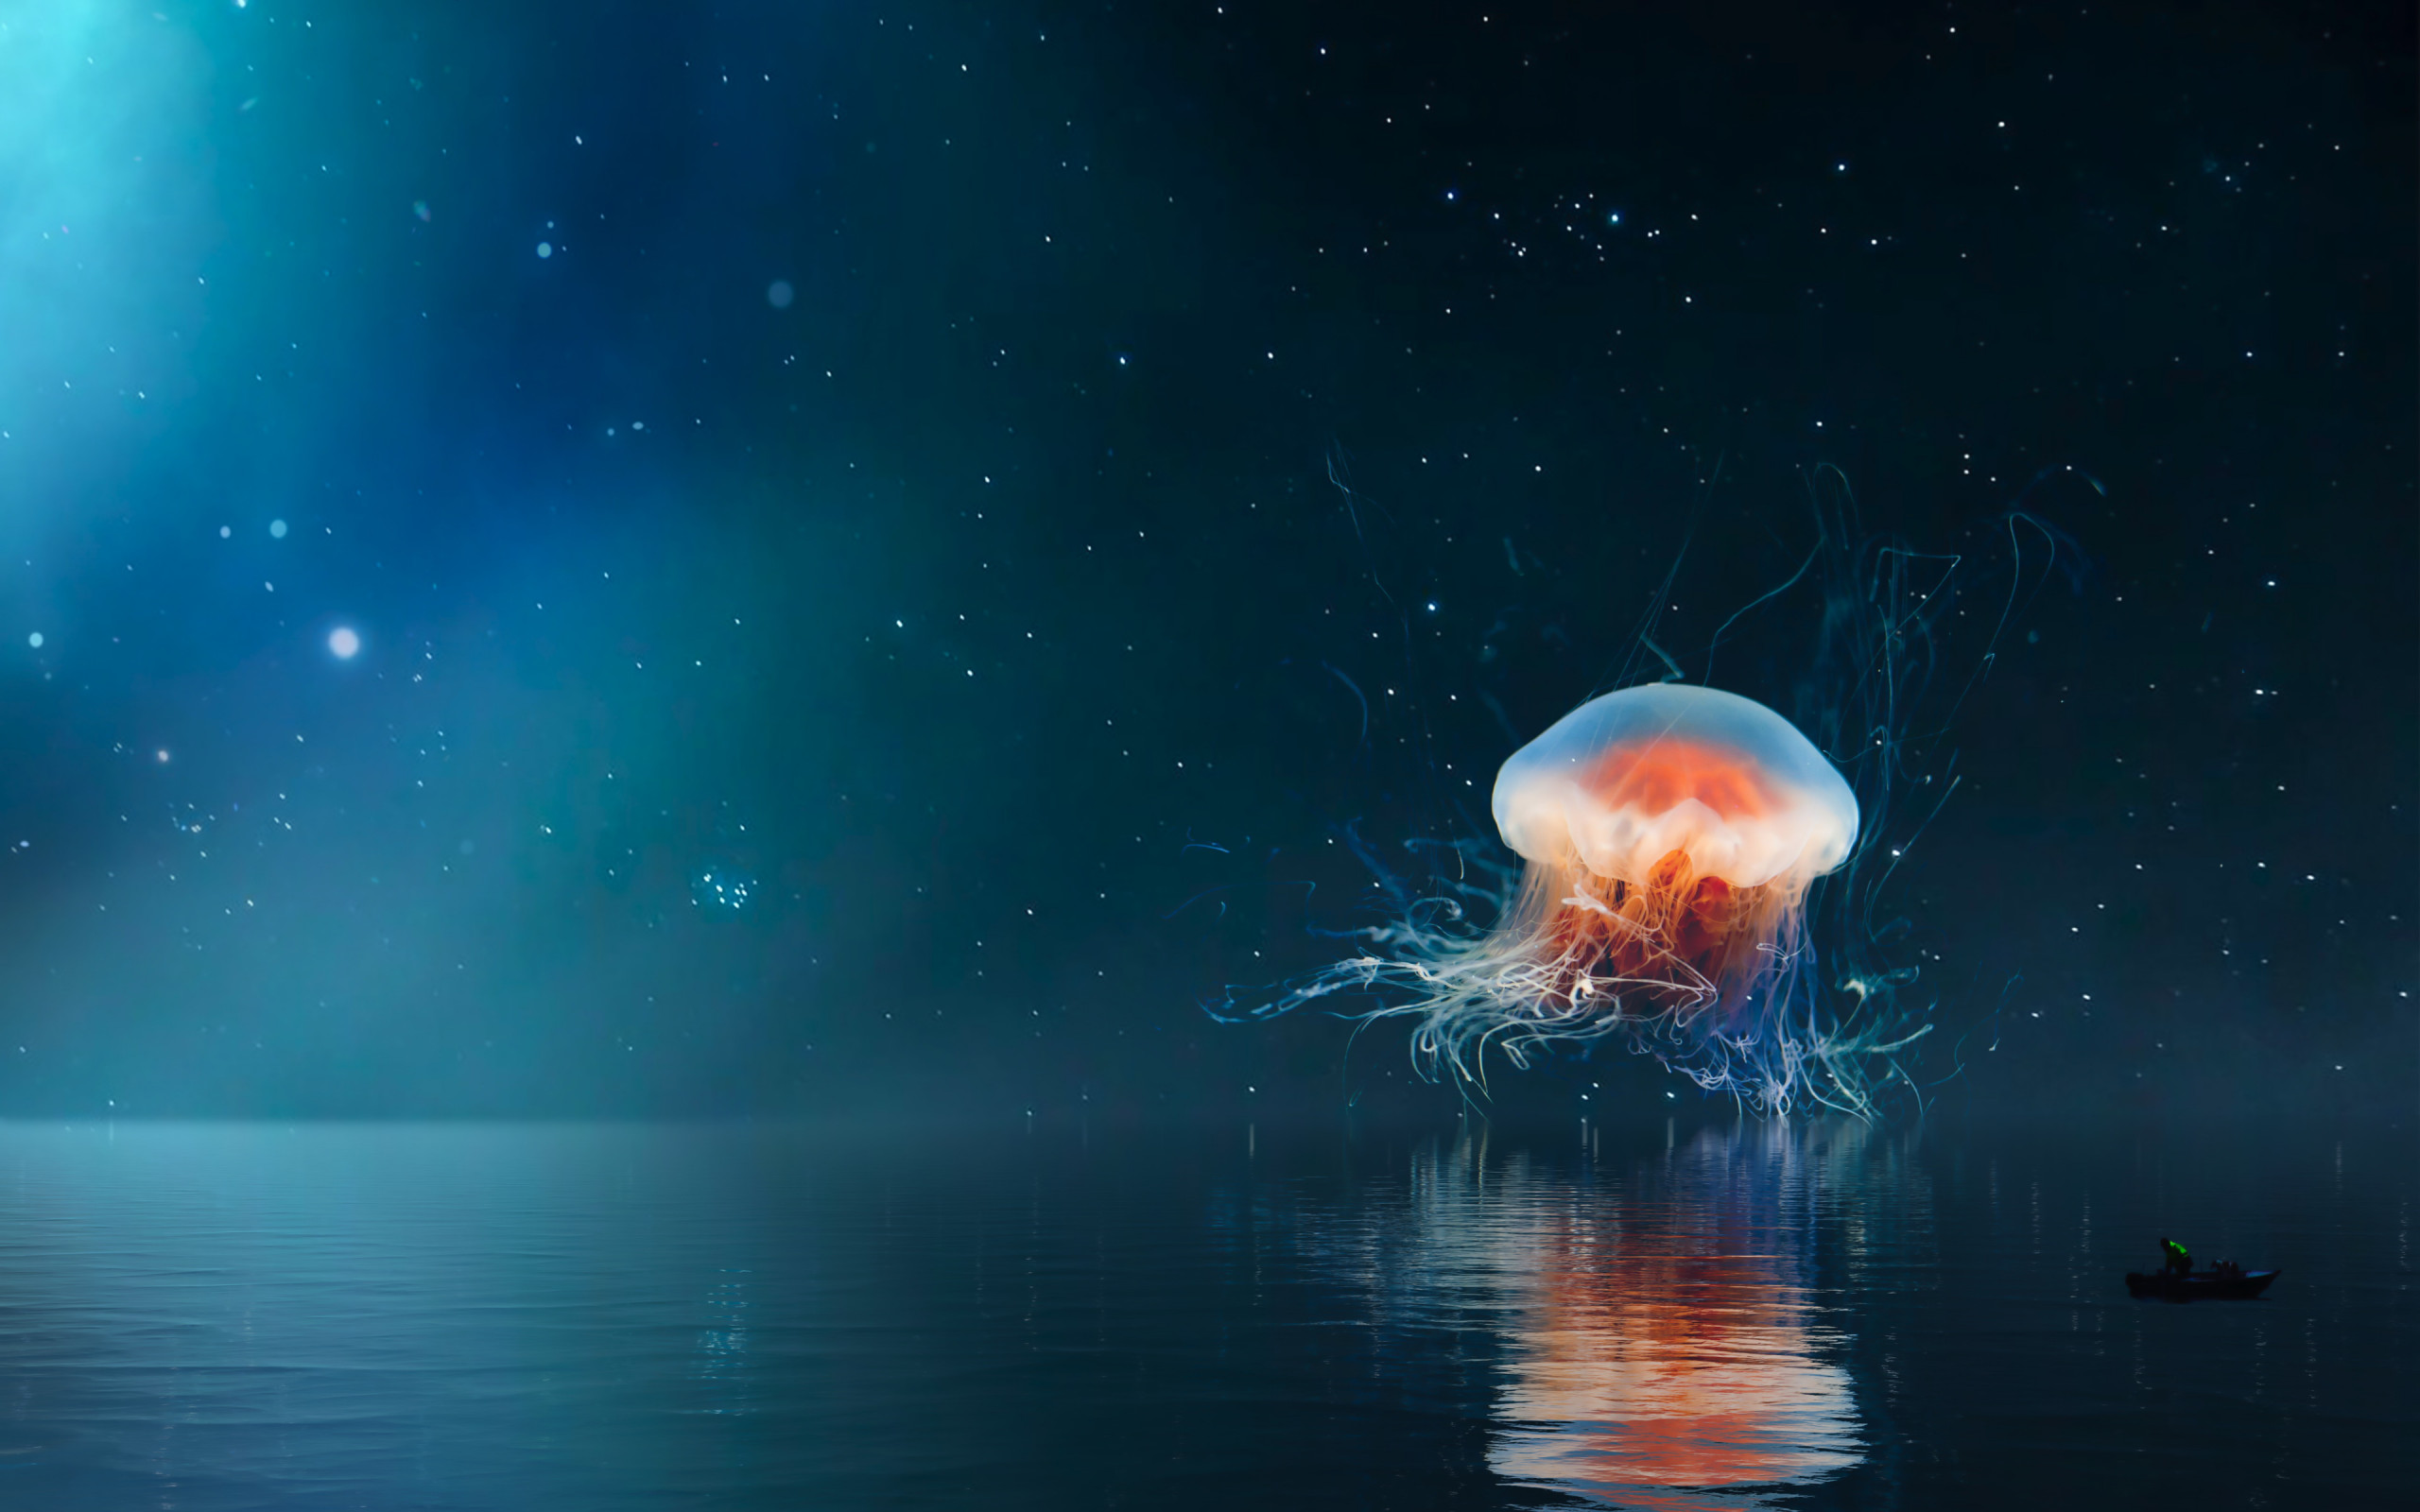 Jellyfish on the night sky wallpaper 2560x1600